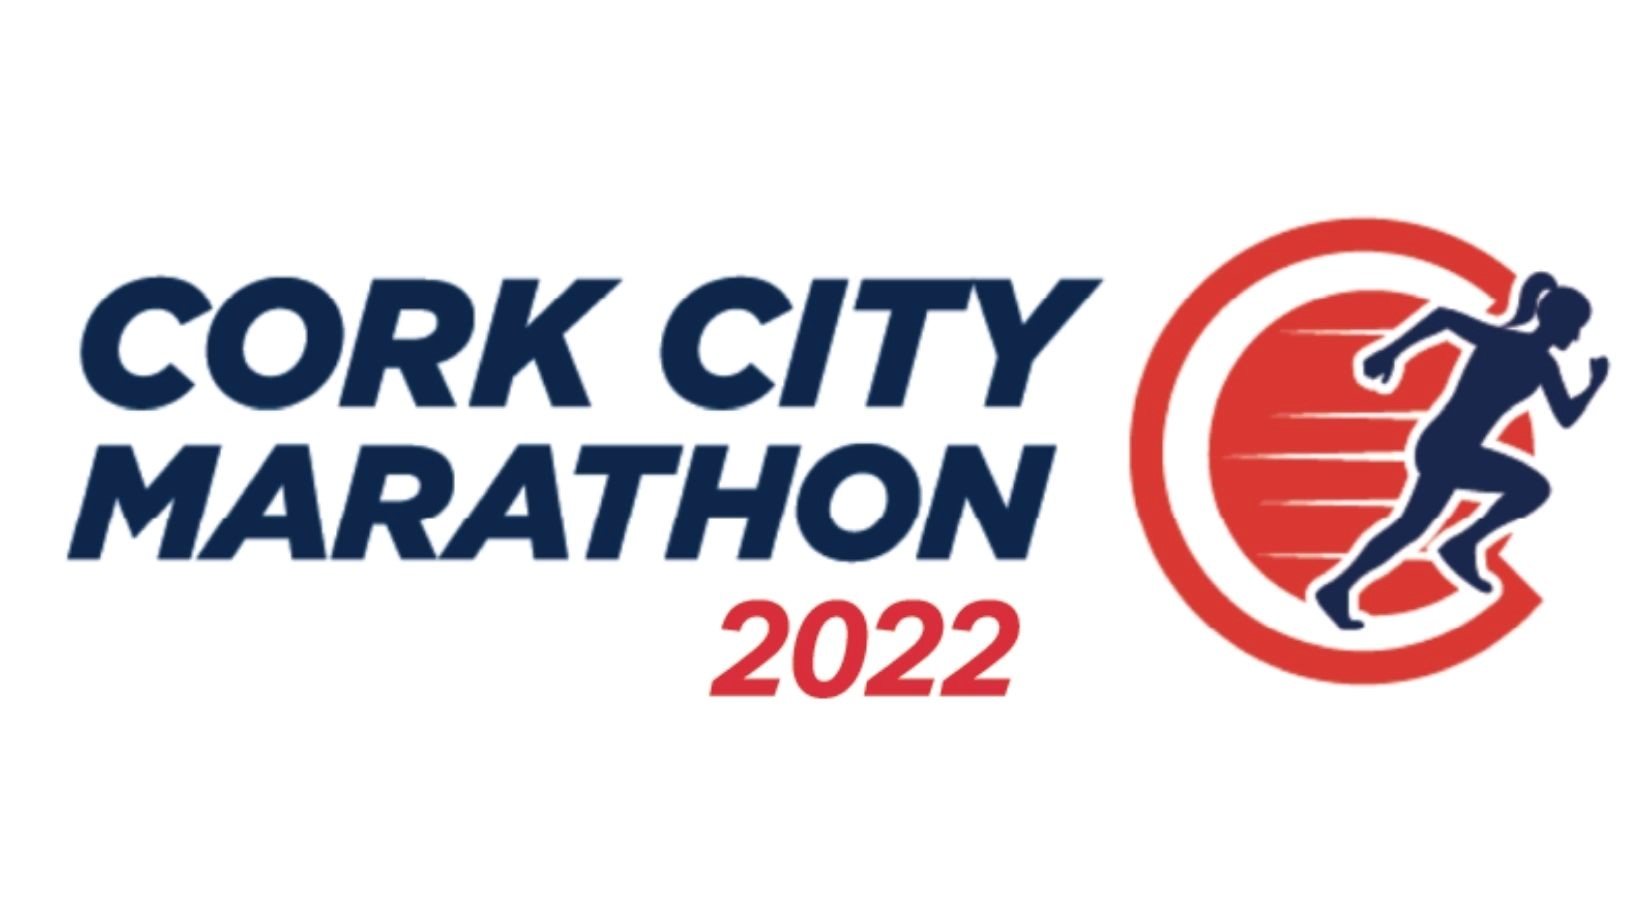 Cork City Marathon 2022